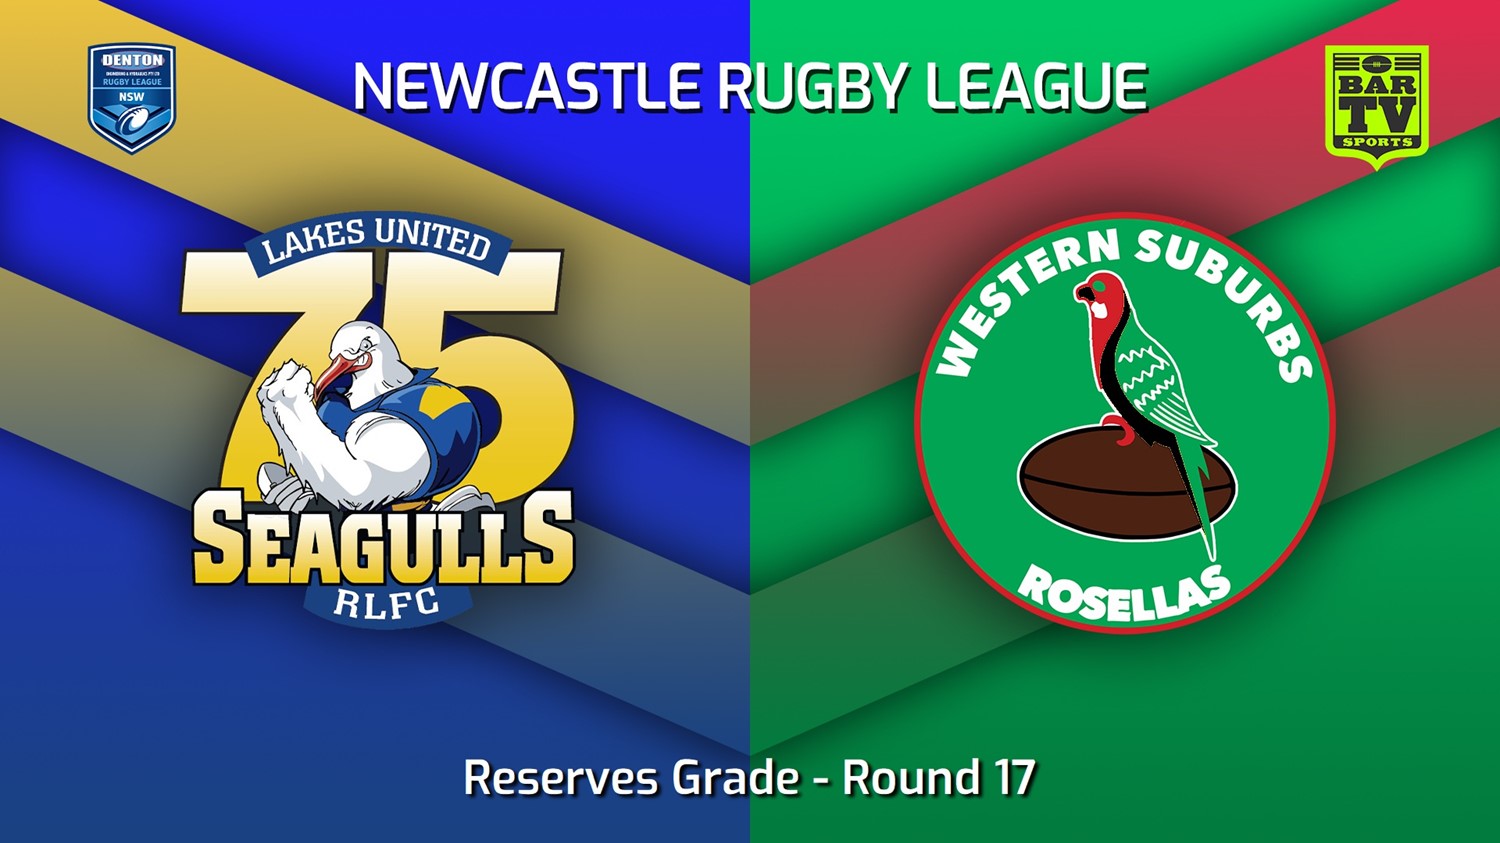 220730-Newcastle Round 17 - Reserves Grade - Lakes United v Western Suburbs Rosellas Slate Image